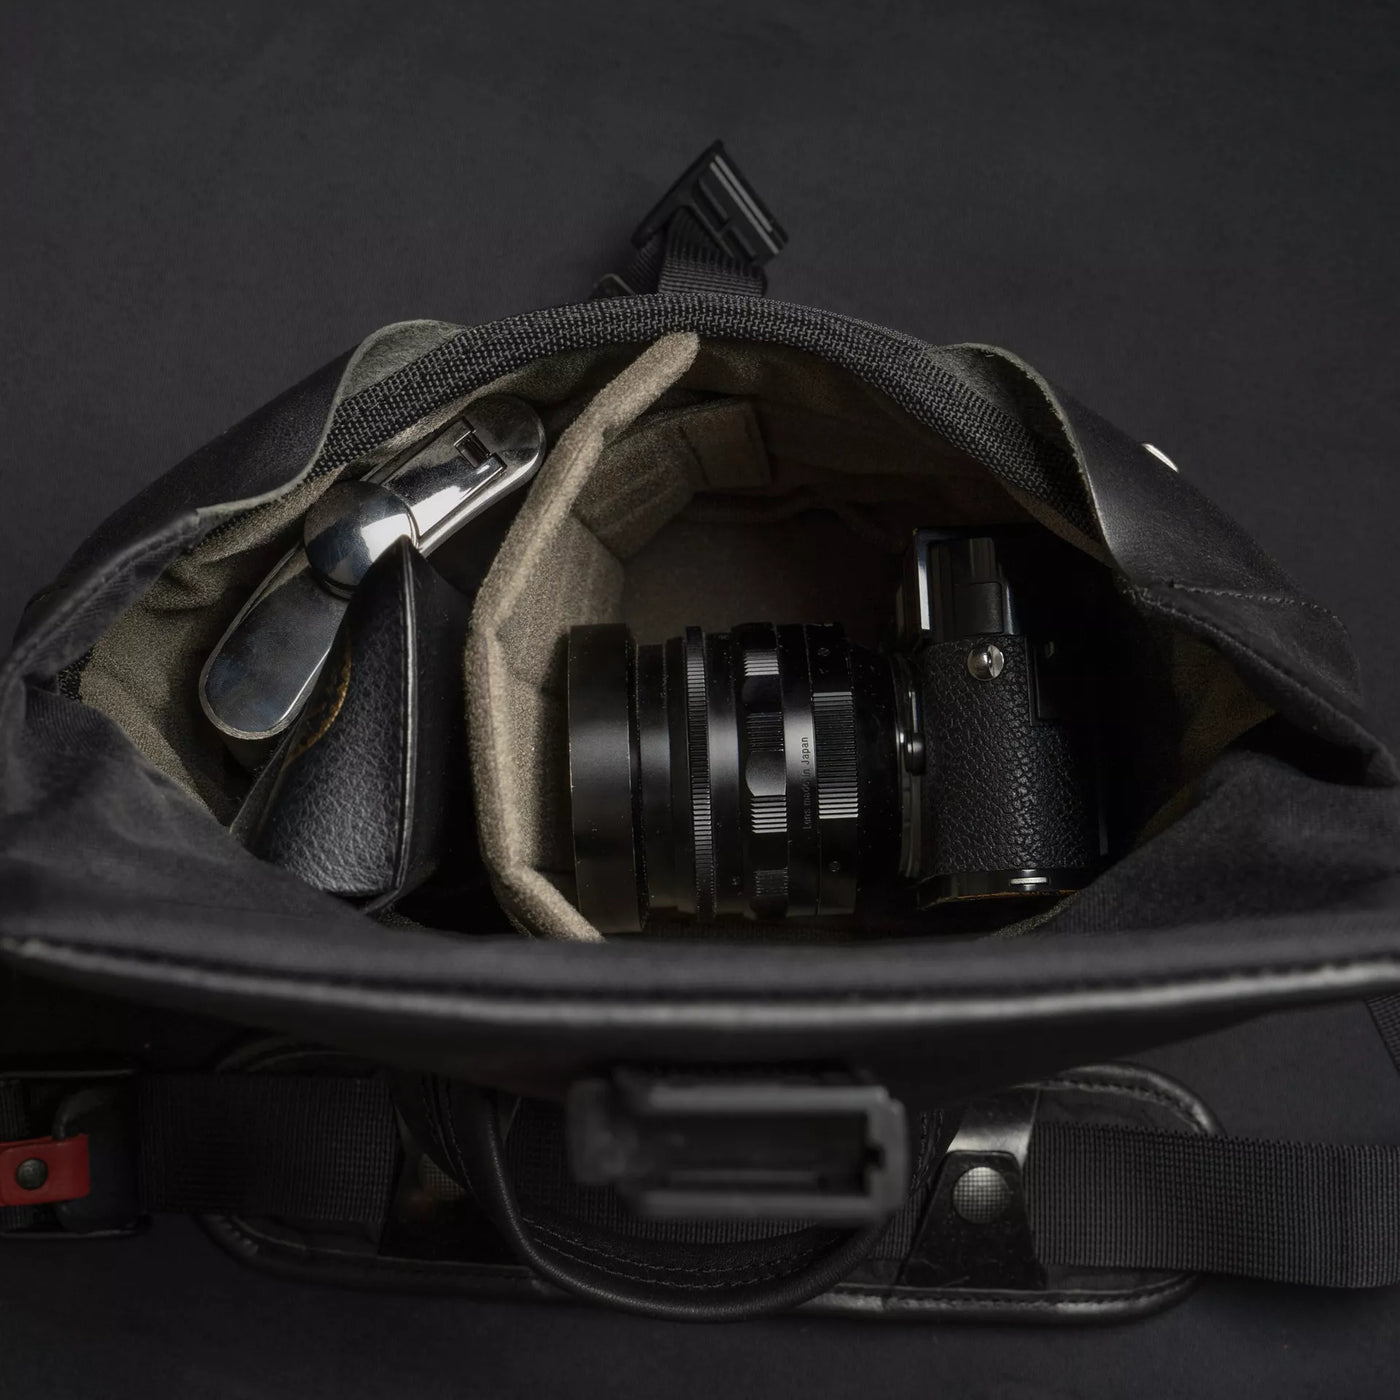 Leather Pilot Travel Camera Bag | 3.5L Upgraded